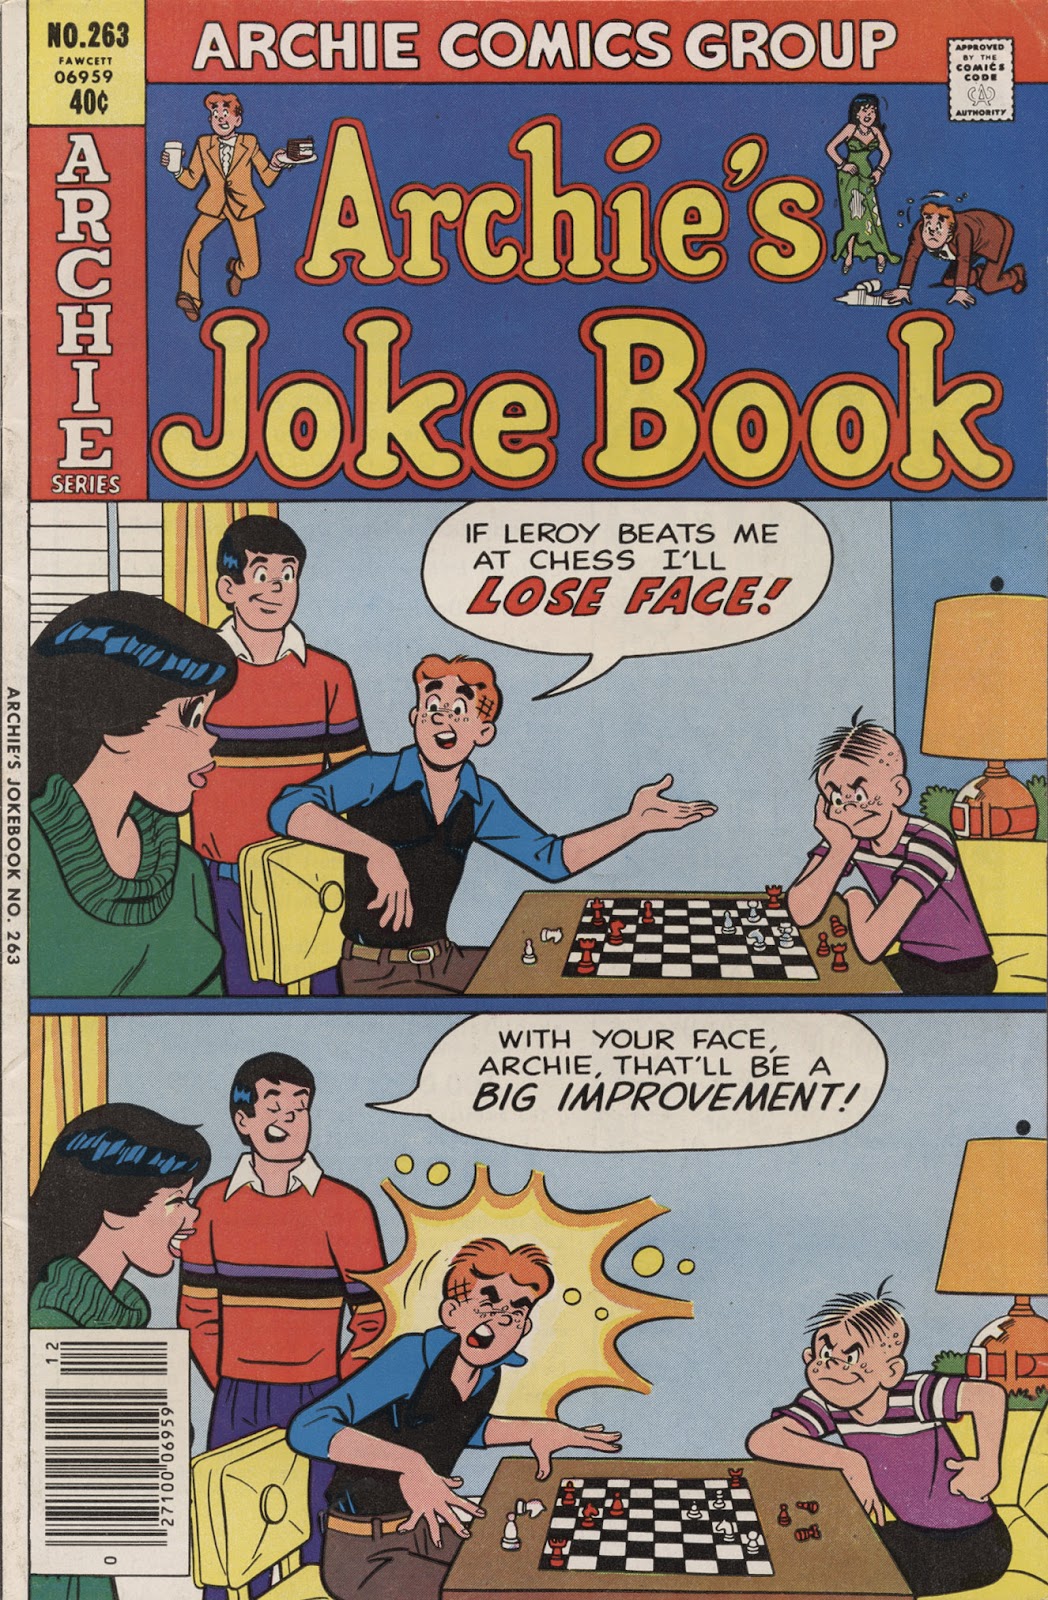 Archie's Joke Book Magazine issue 263 - Page 1